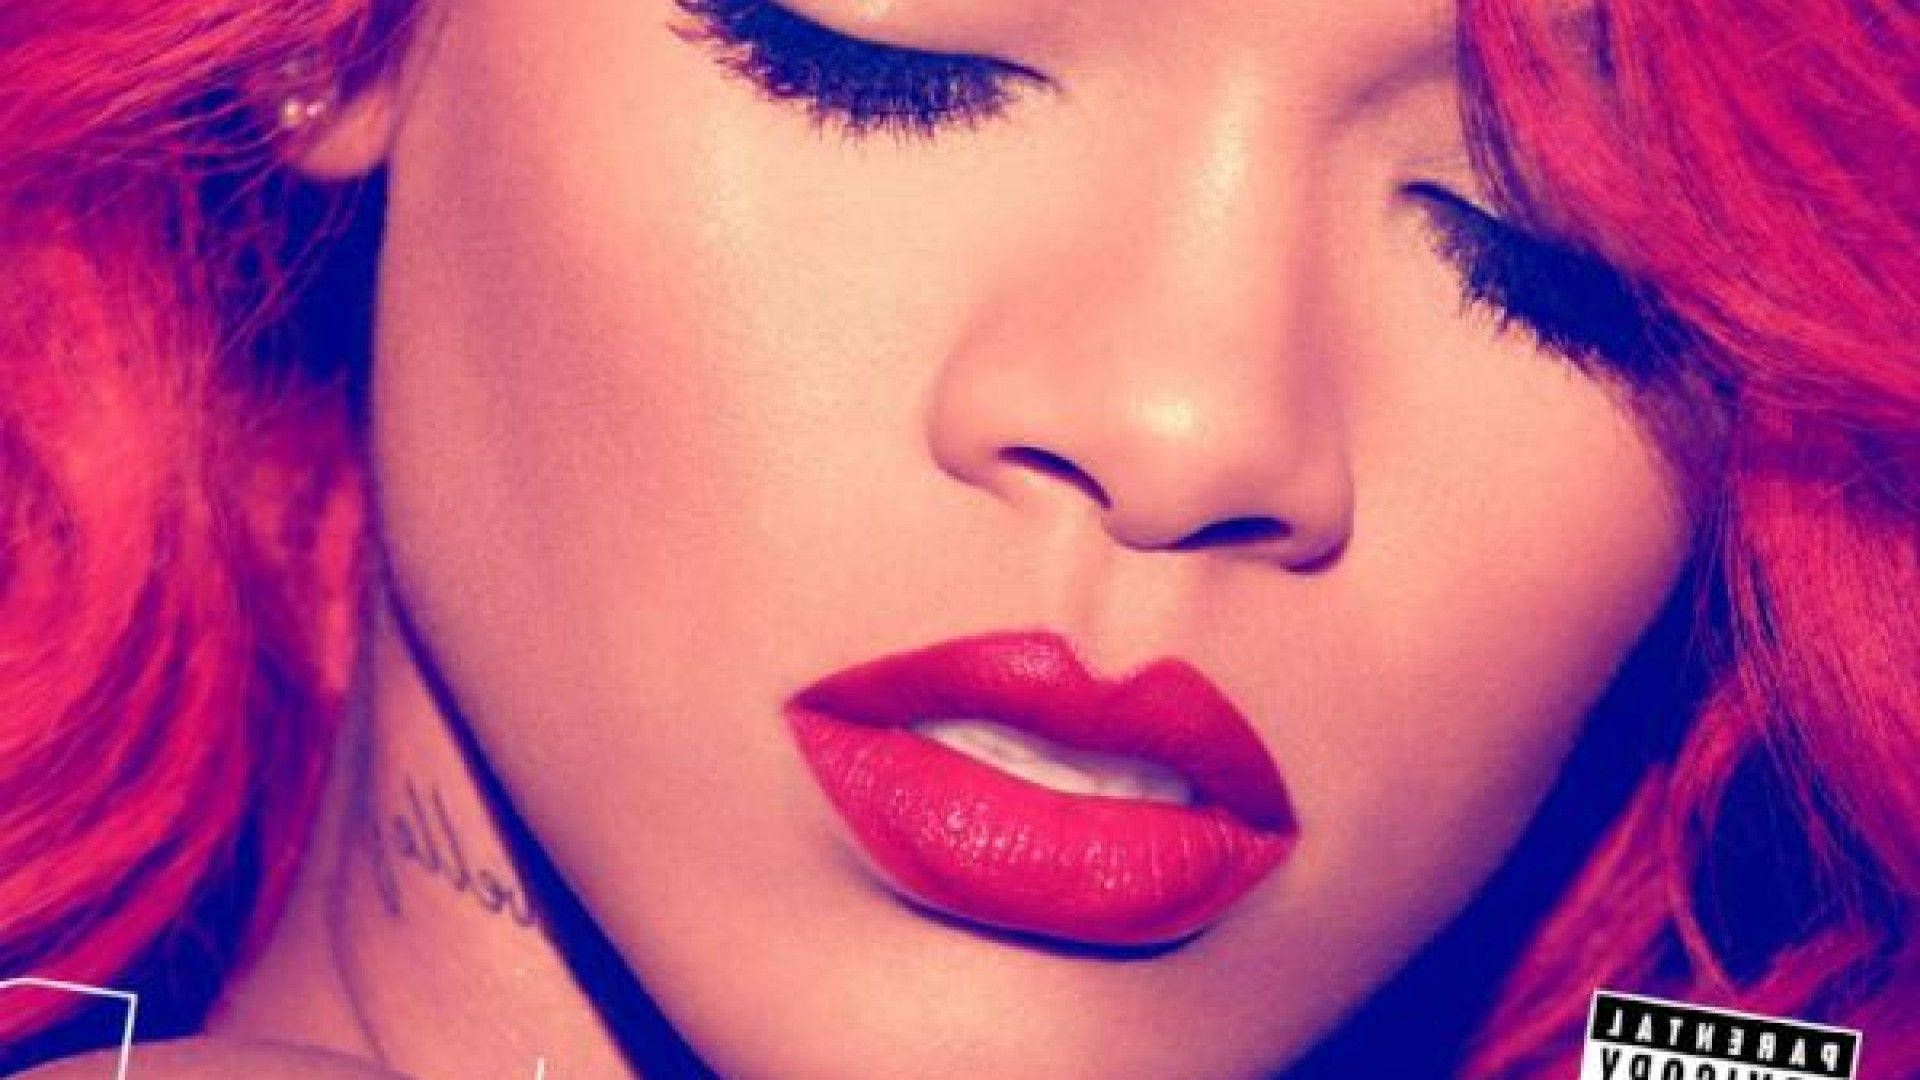 Free Rihanna Wallpaper Downloads, Rihanna Wallpaper for FREE